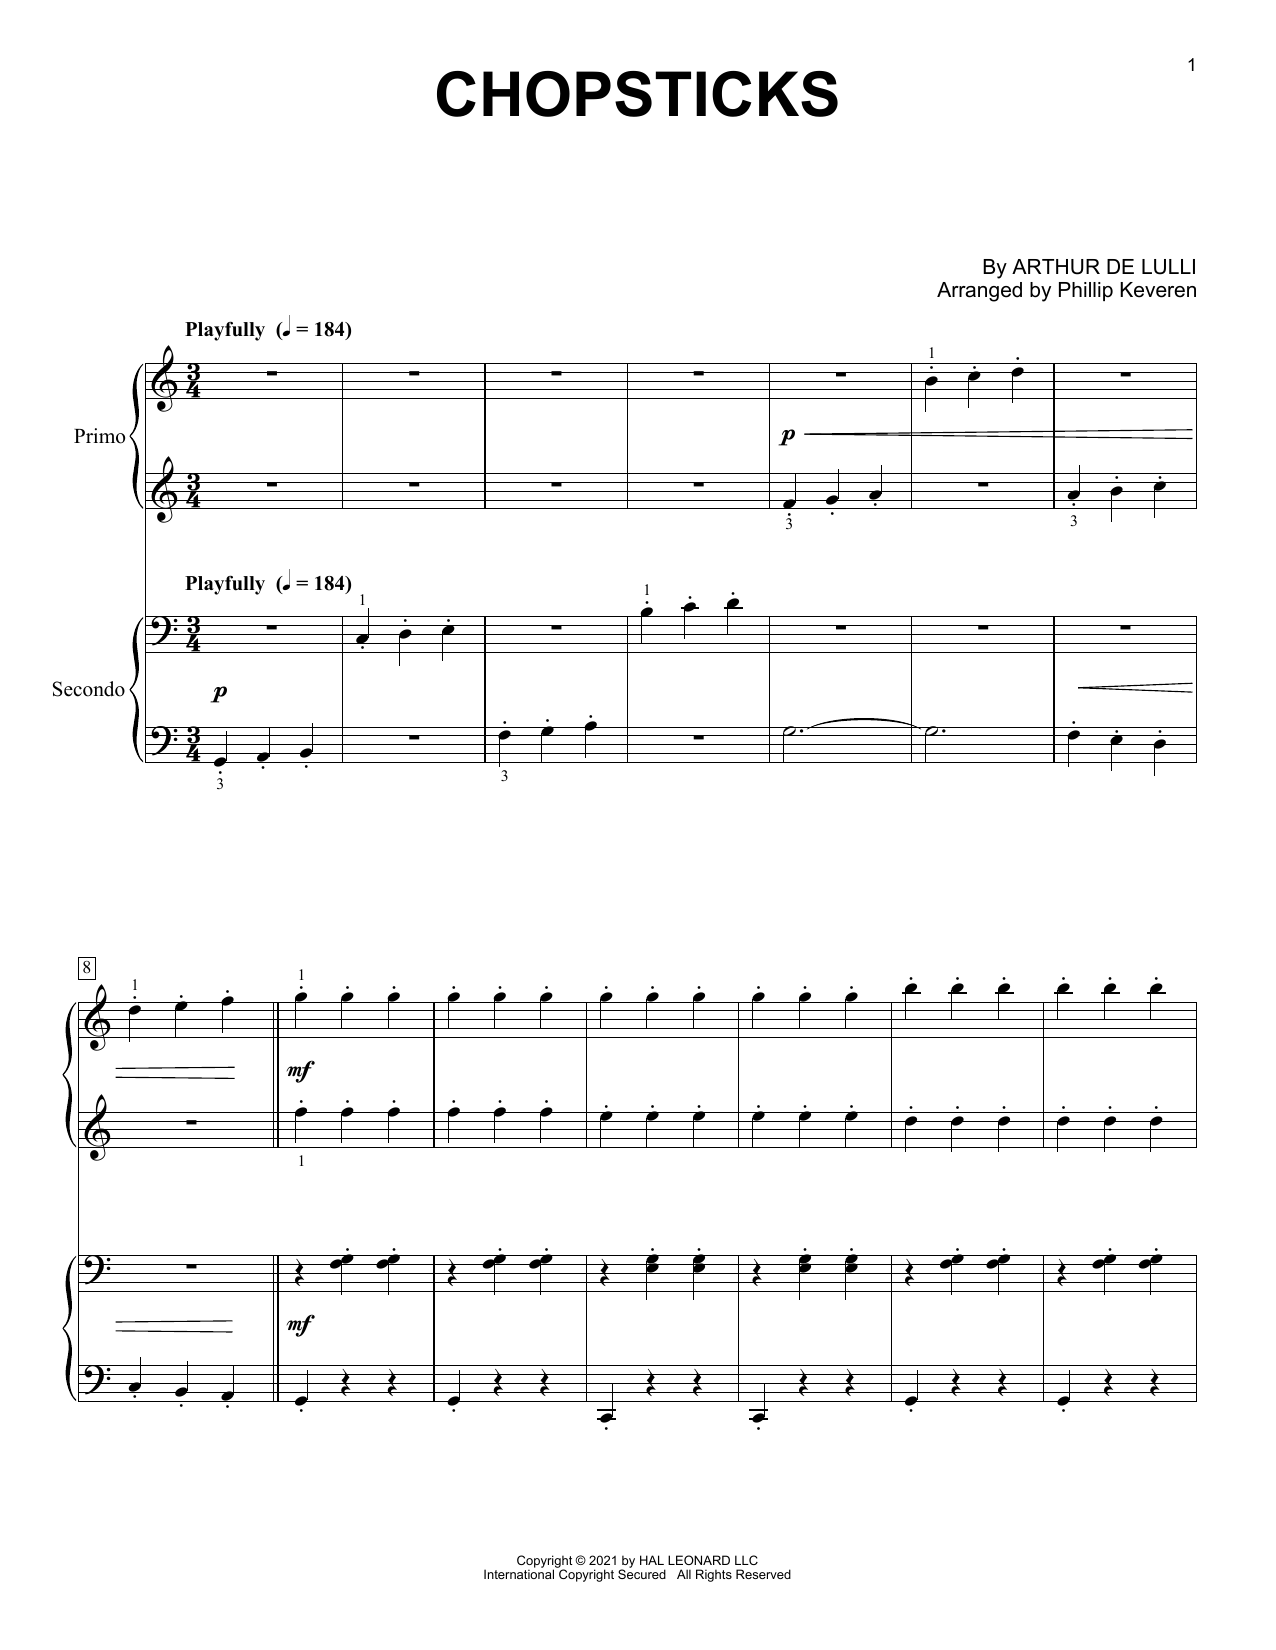 Arthur de Lulli Chopsticks (arr. Phillip Keveren) Sheet Music Notes & Chords for Piano Duet - Download or Print PDF